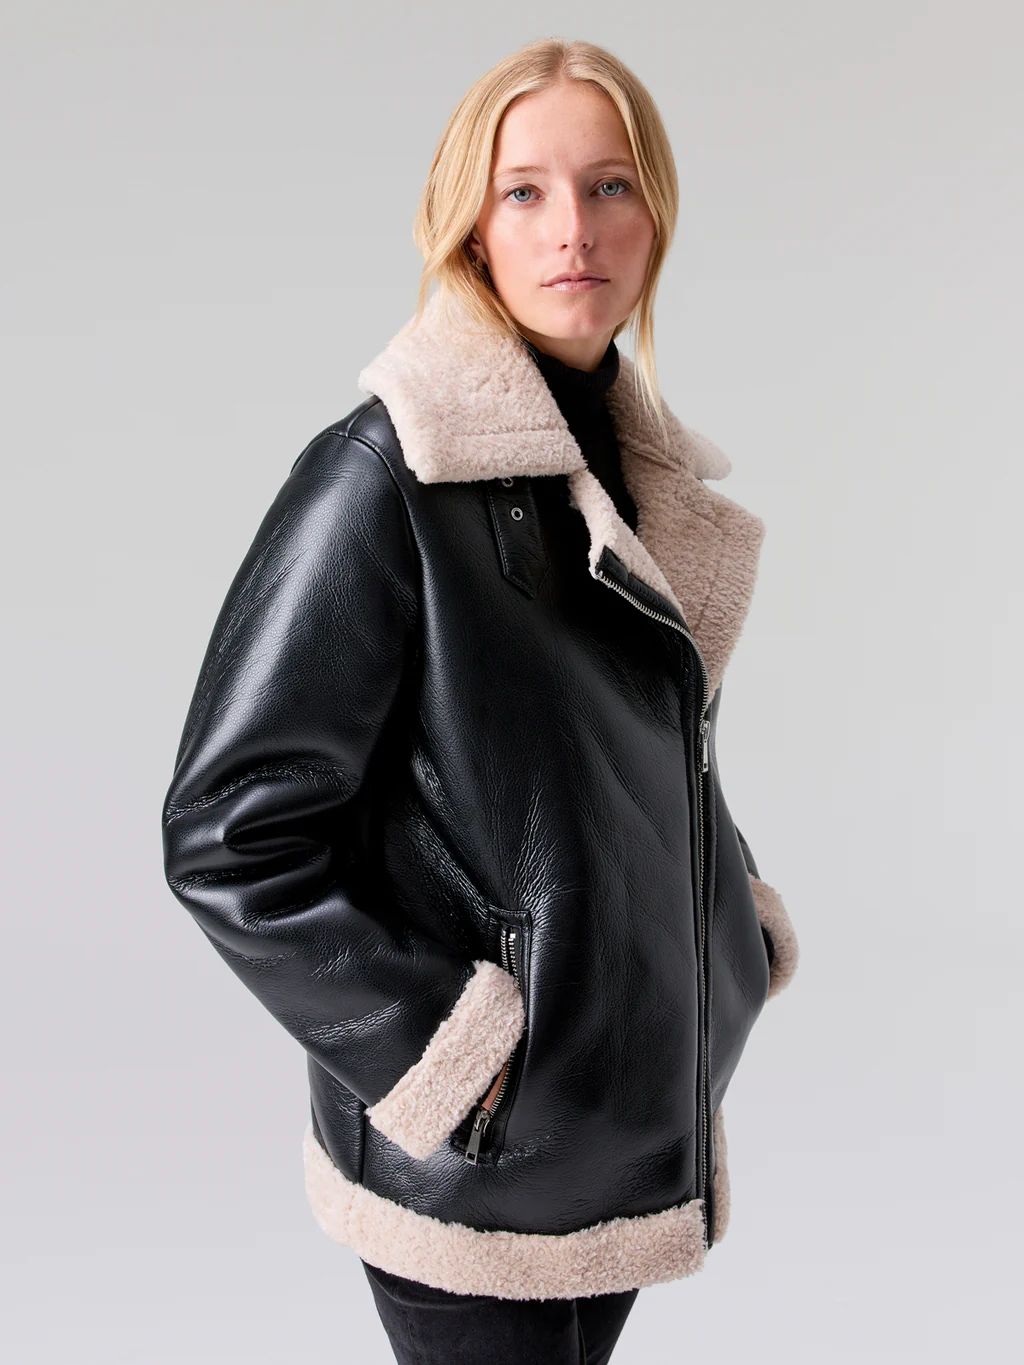 Alexa Asymmetrical Coat Black and Beige | Sanctuary Clothing